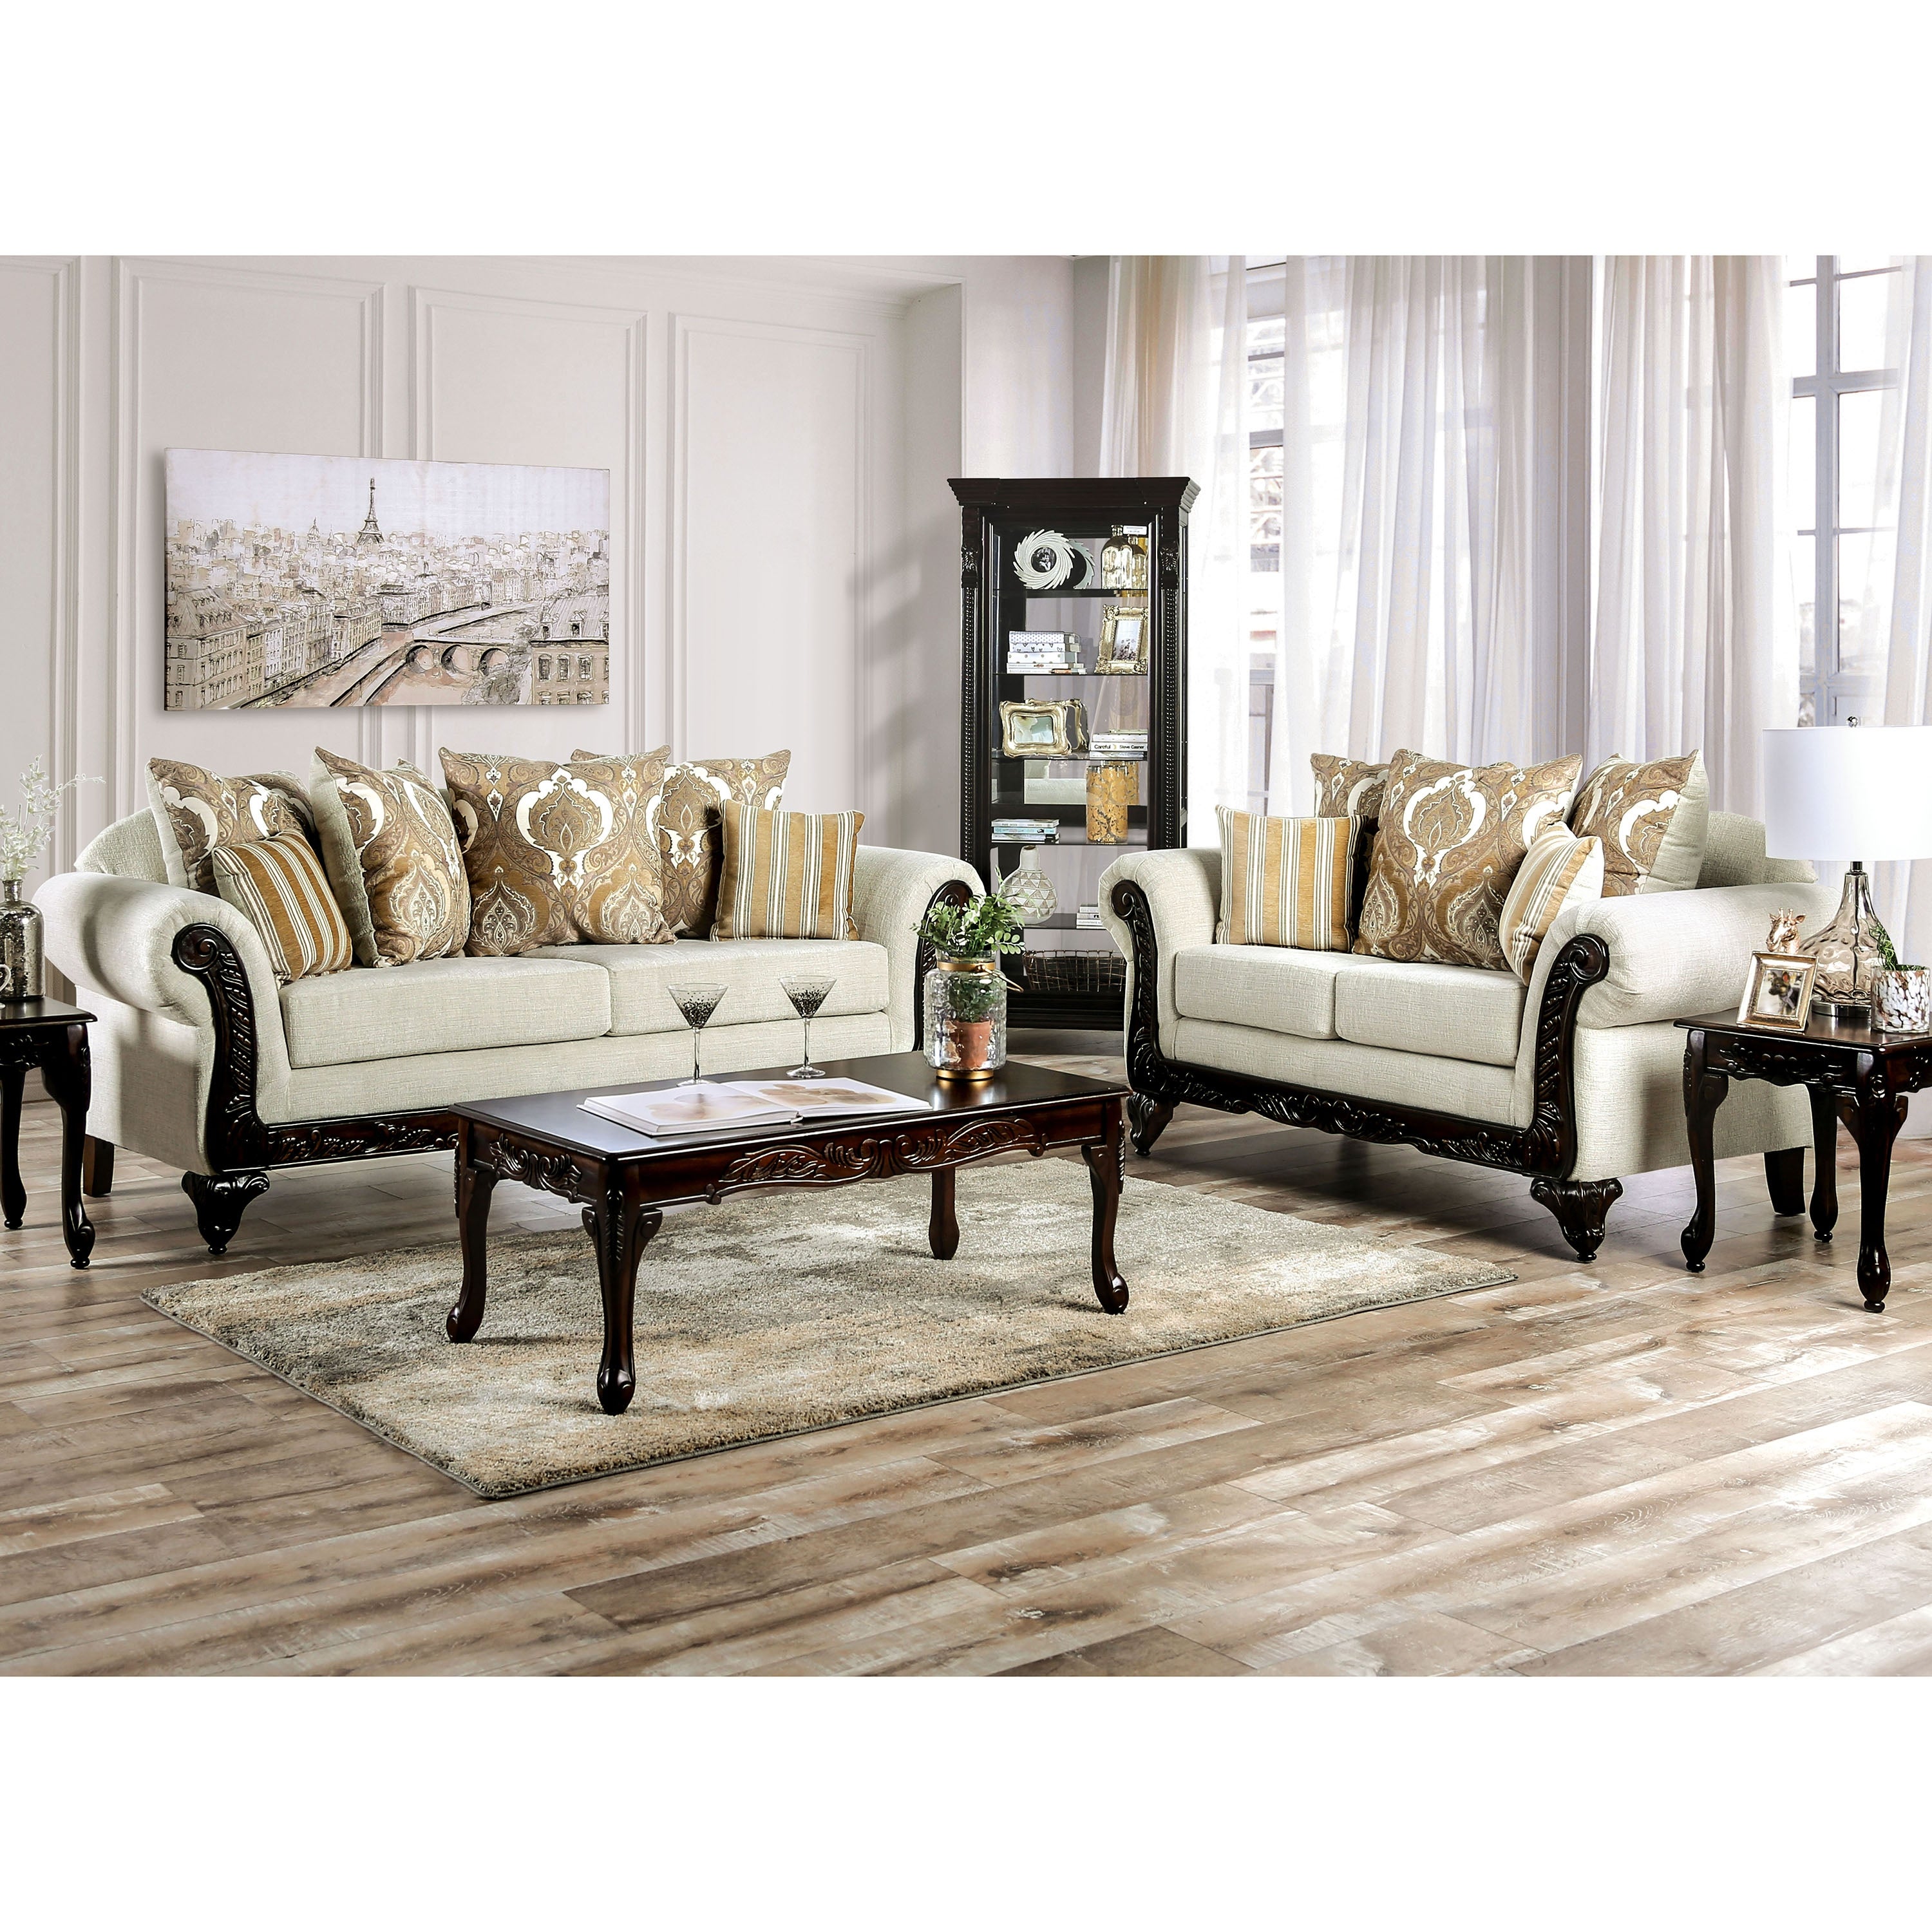 traditional living room furniture sets